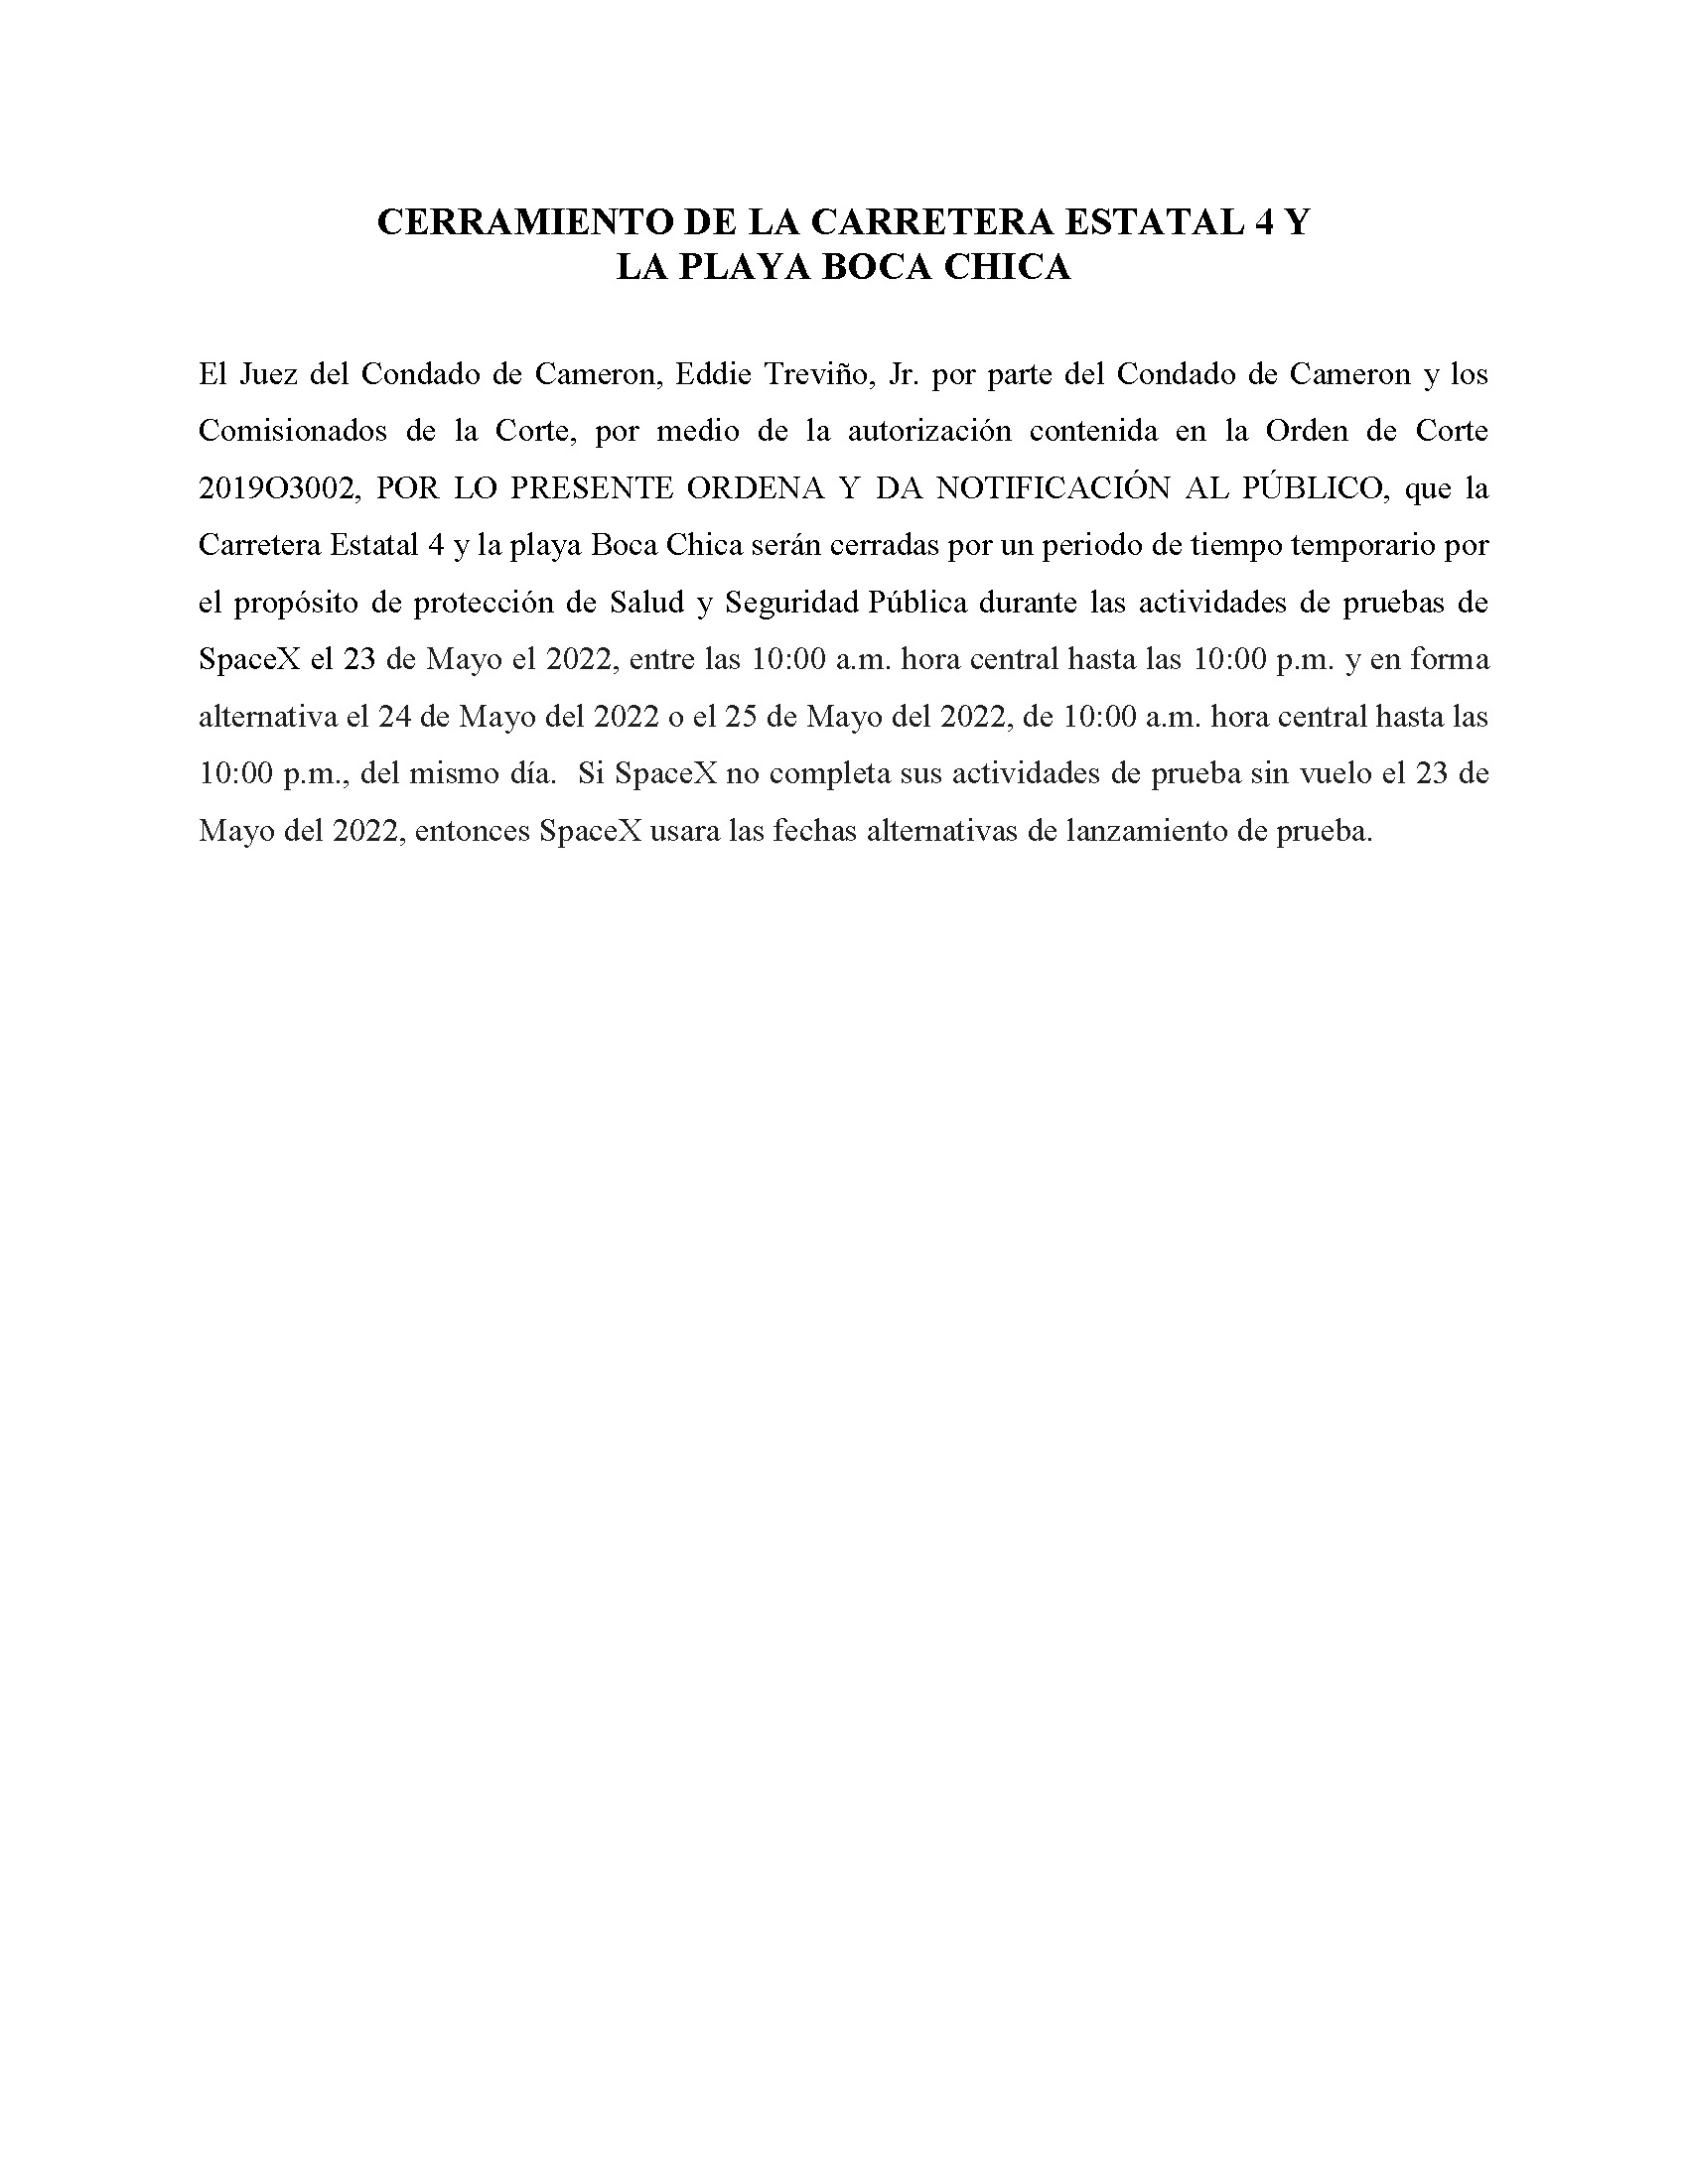 ORDER.CLOSURE OF HIGHWAY 4 Y LA PLAYA BOCA CHICA.SPANISH.05.23.2022